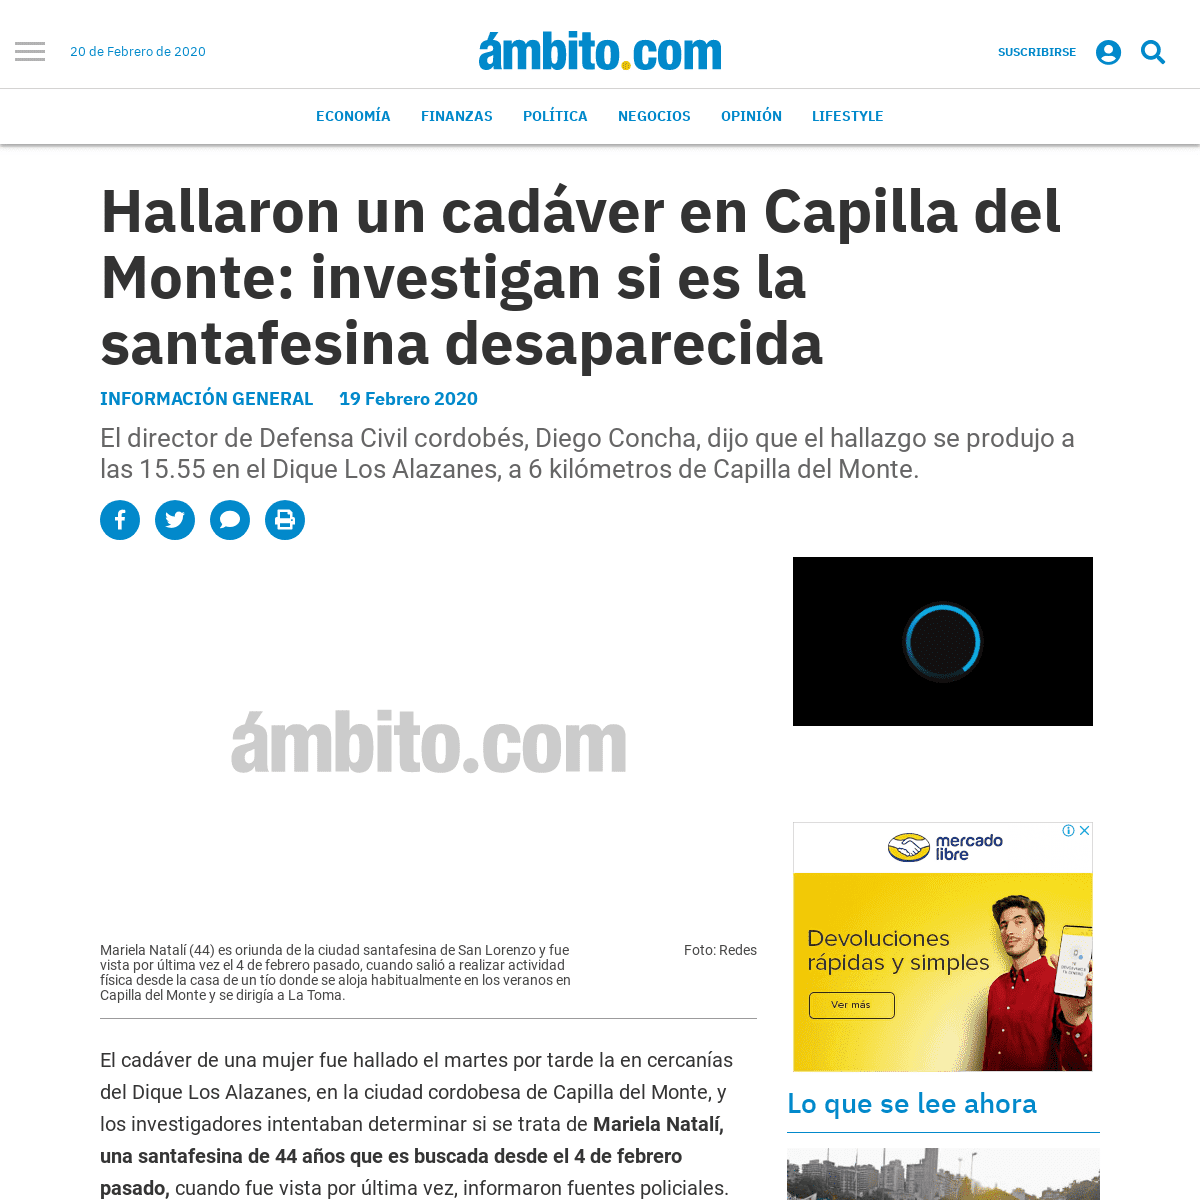 A complete backup of www.ambito.com/informacion-general/femicidios/hallaron-un-cadaver-capilla-del-monte-investigan-si-es-la-san